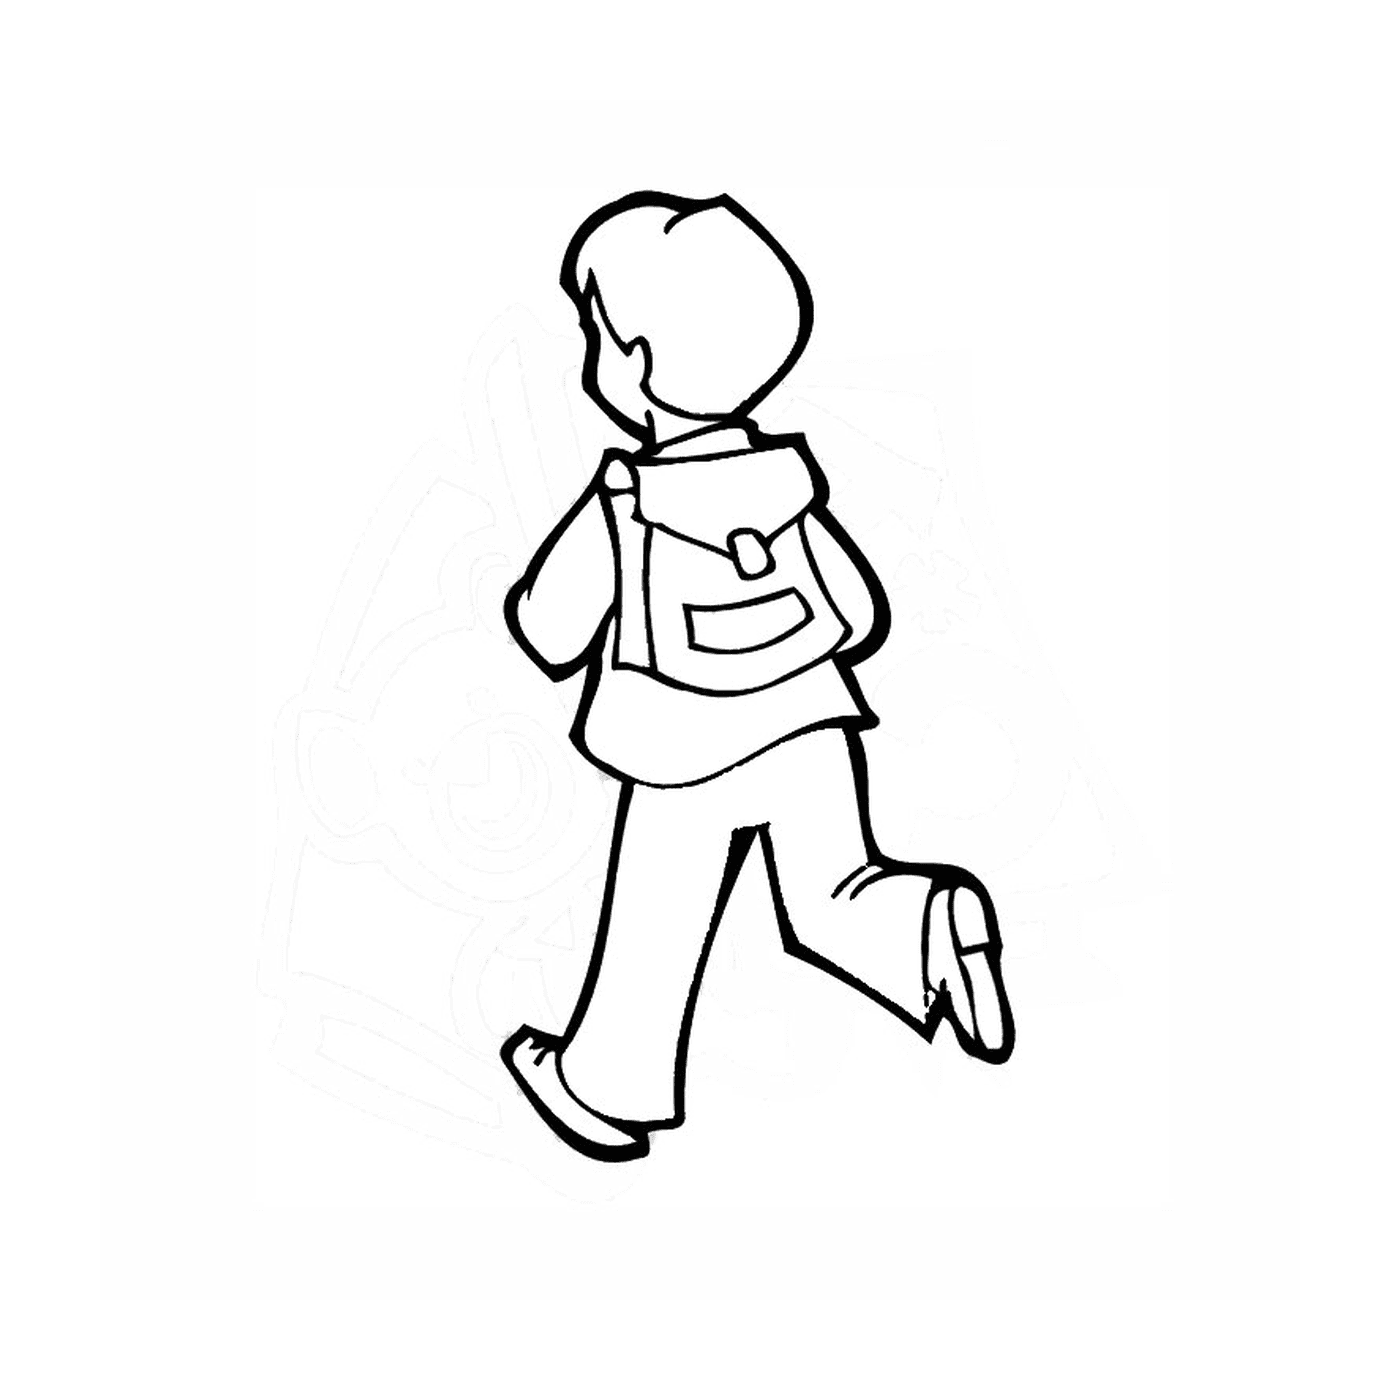  I'm going to school: a boy walking 